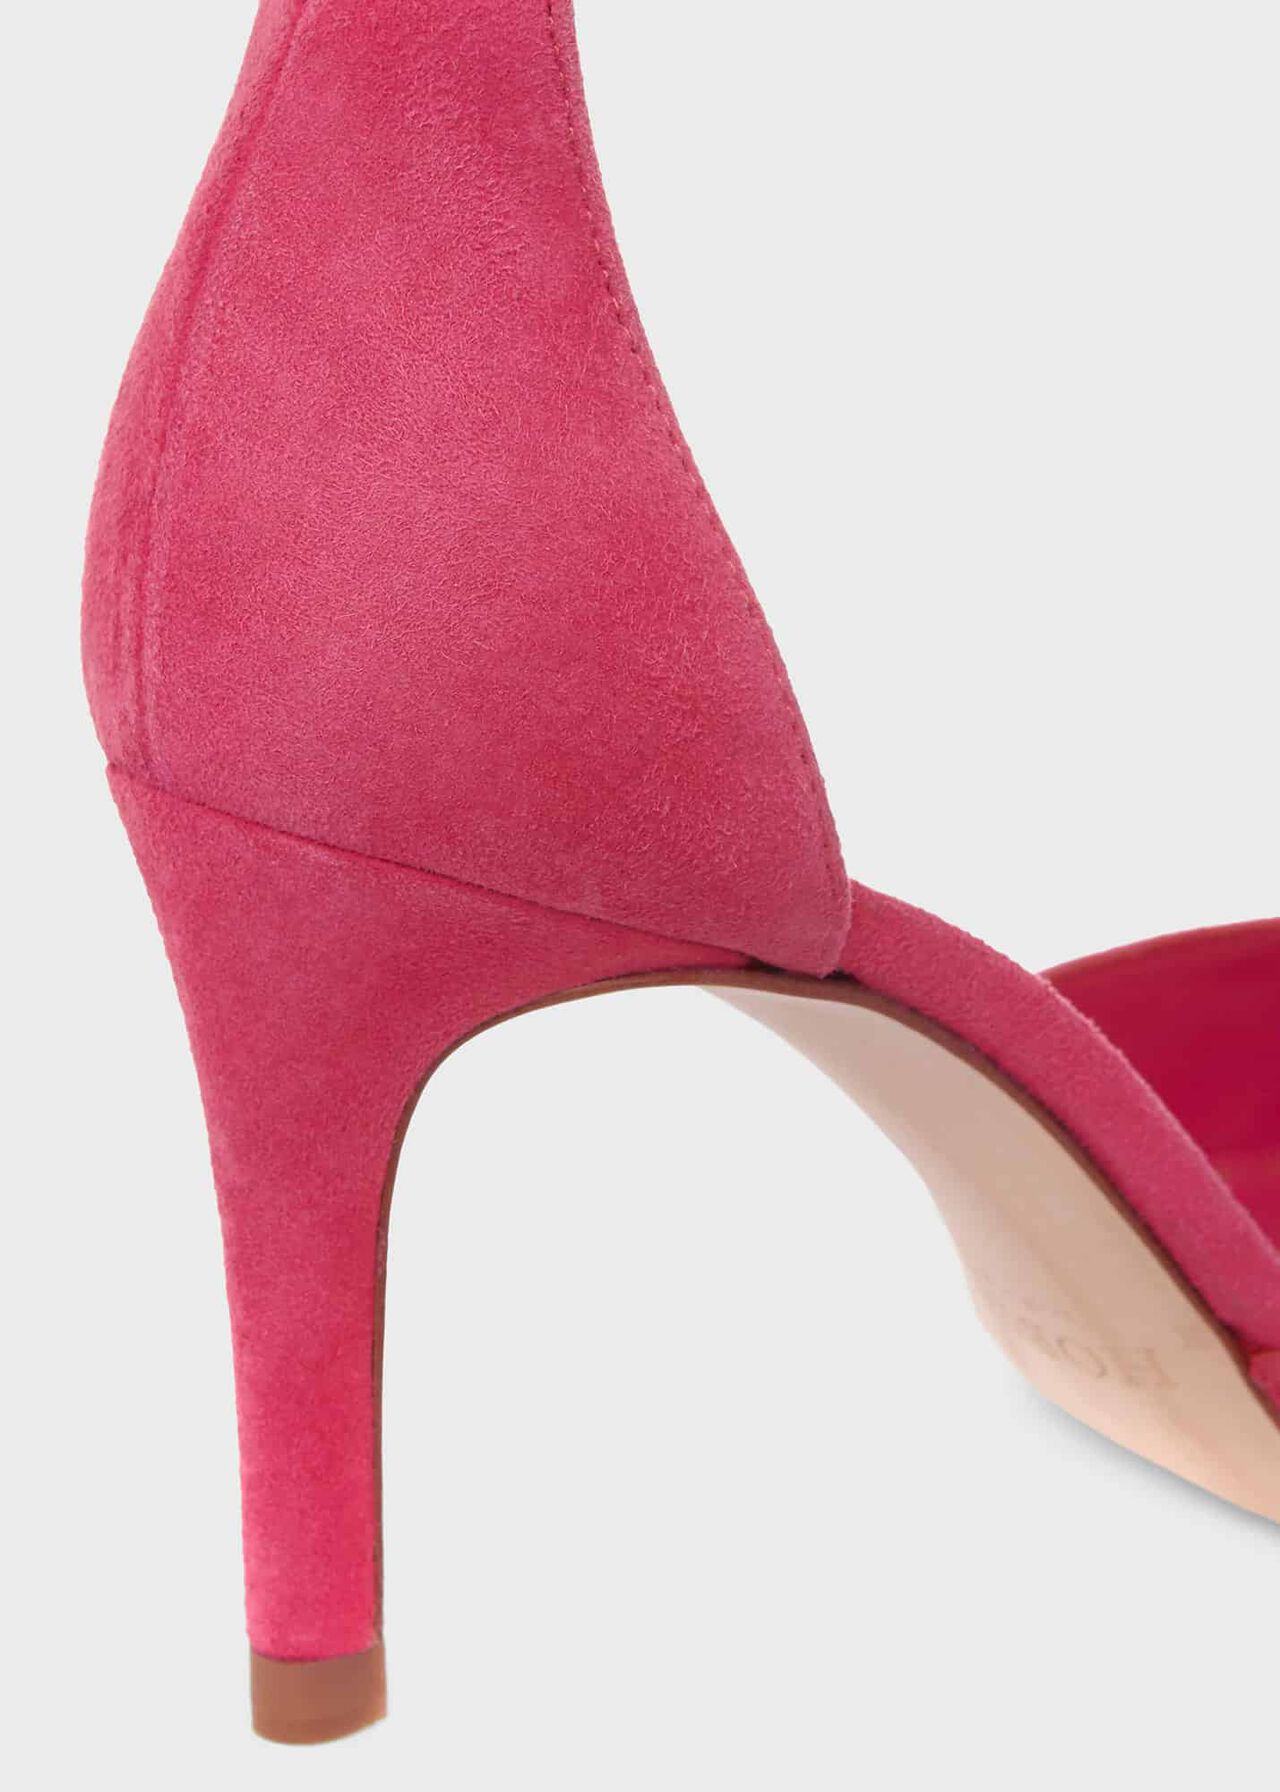 Elliya Court Shoes, Bright Pink, hi-res